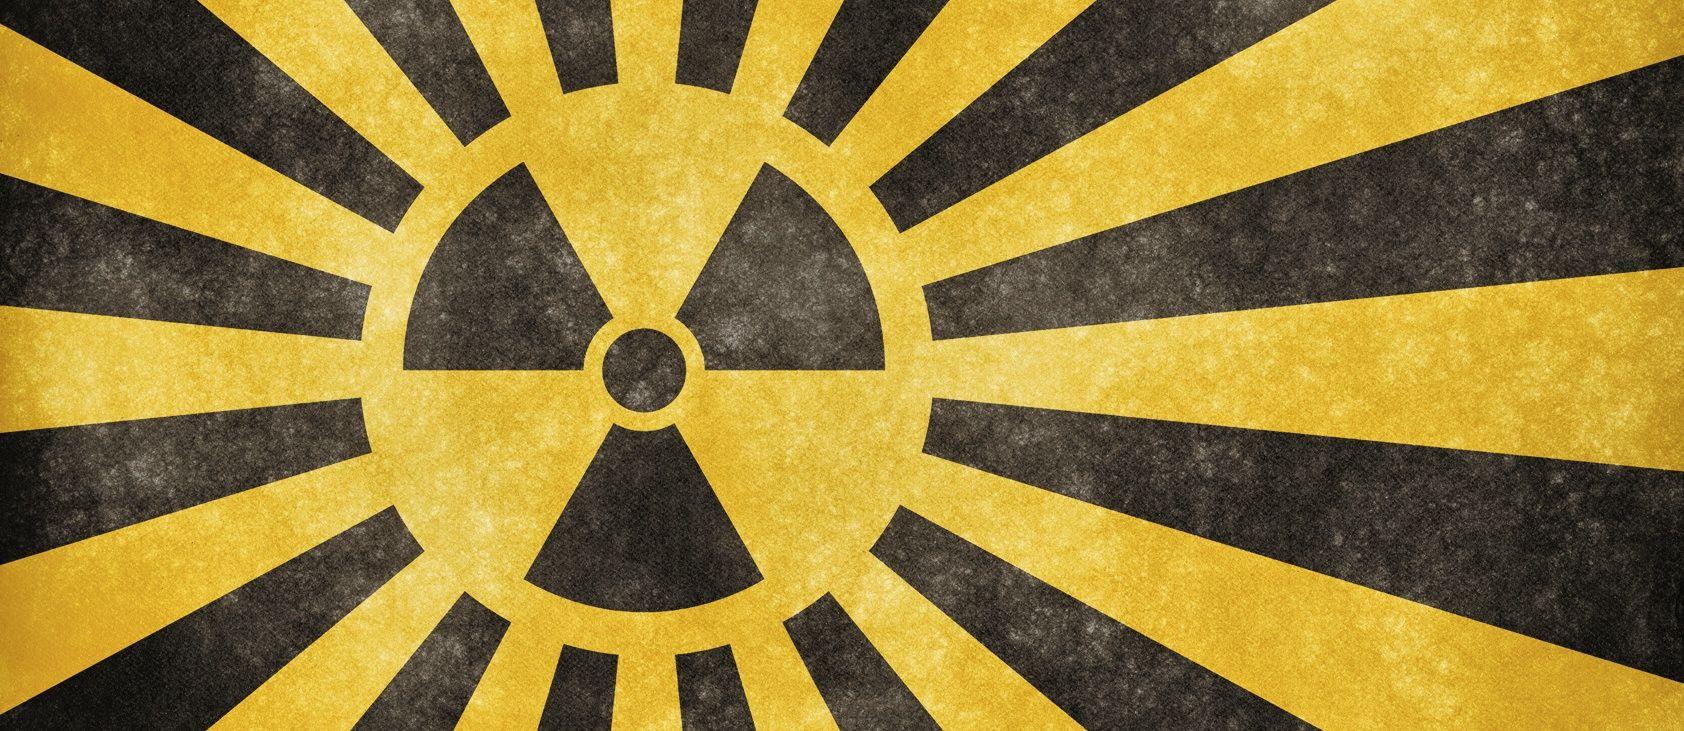 Download Quality Radioactive Wallpaper